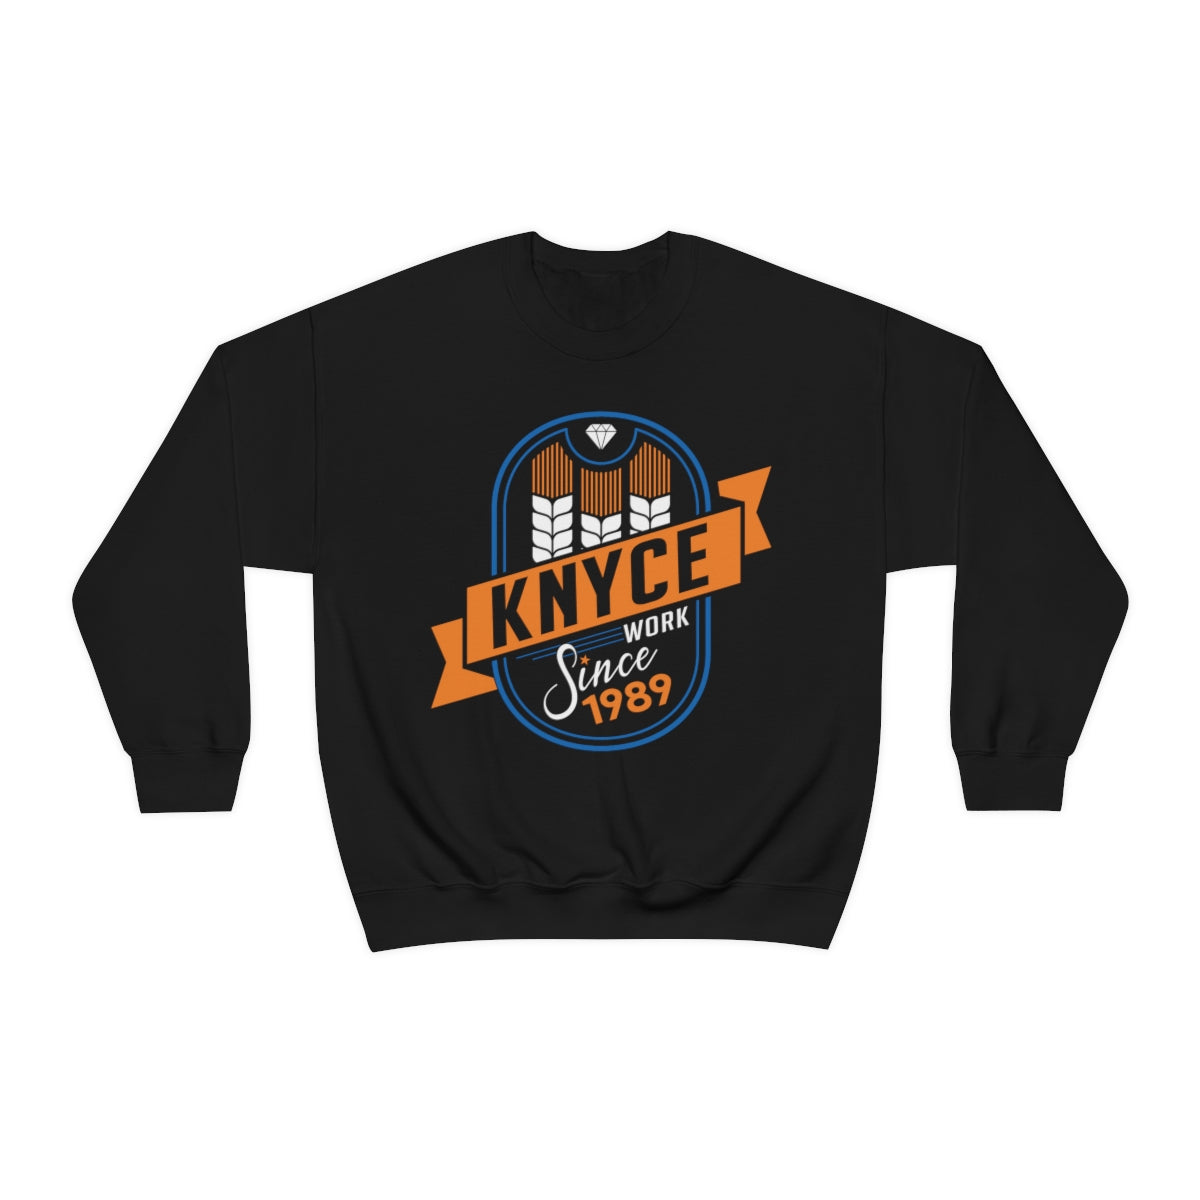 "Since 1989" (Madison Square) Sweatshirt